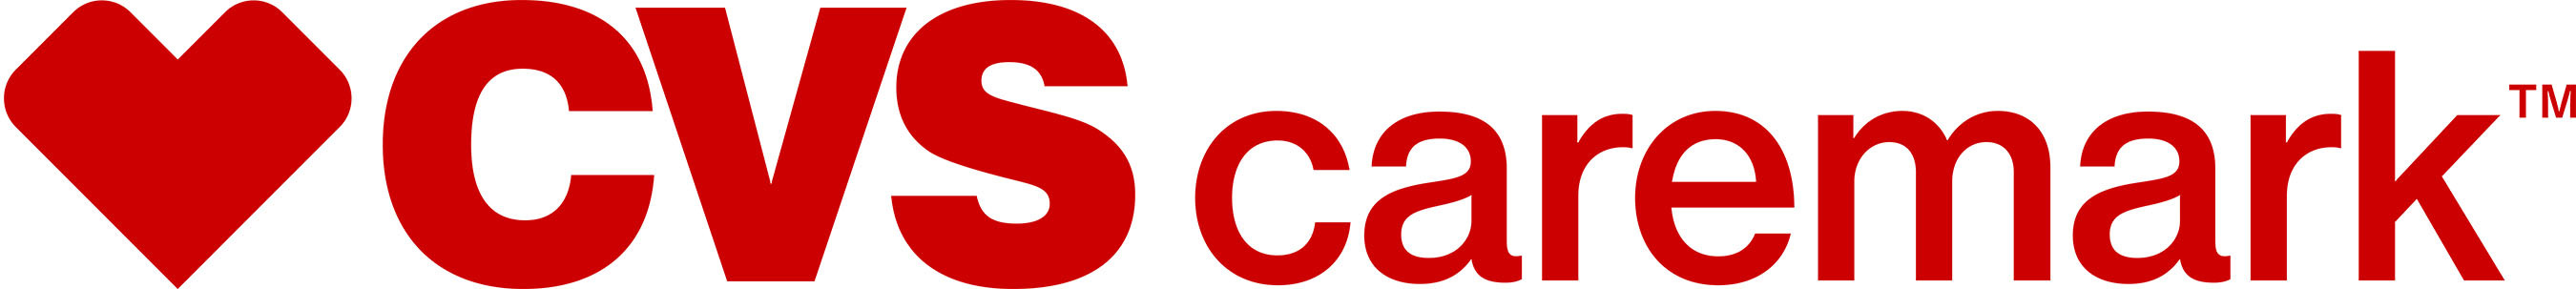 CVS Caremark logo. (PRNewsFoto/CVS Caremark Corporation) (PRNewsFoto/CVS CAREMARK)